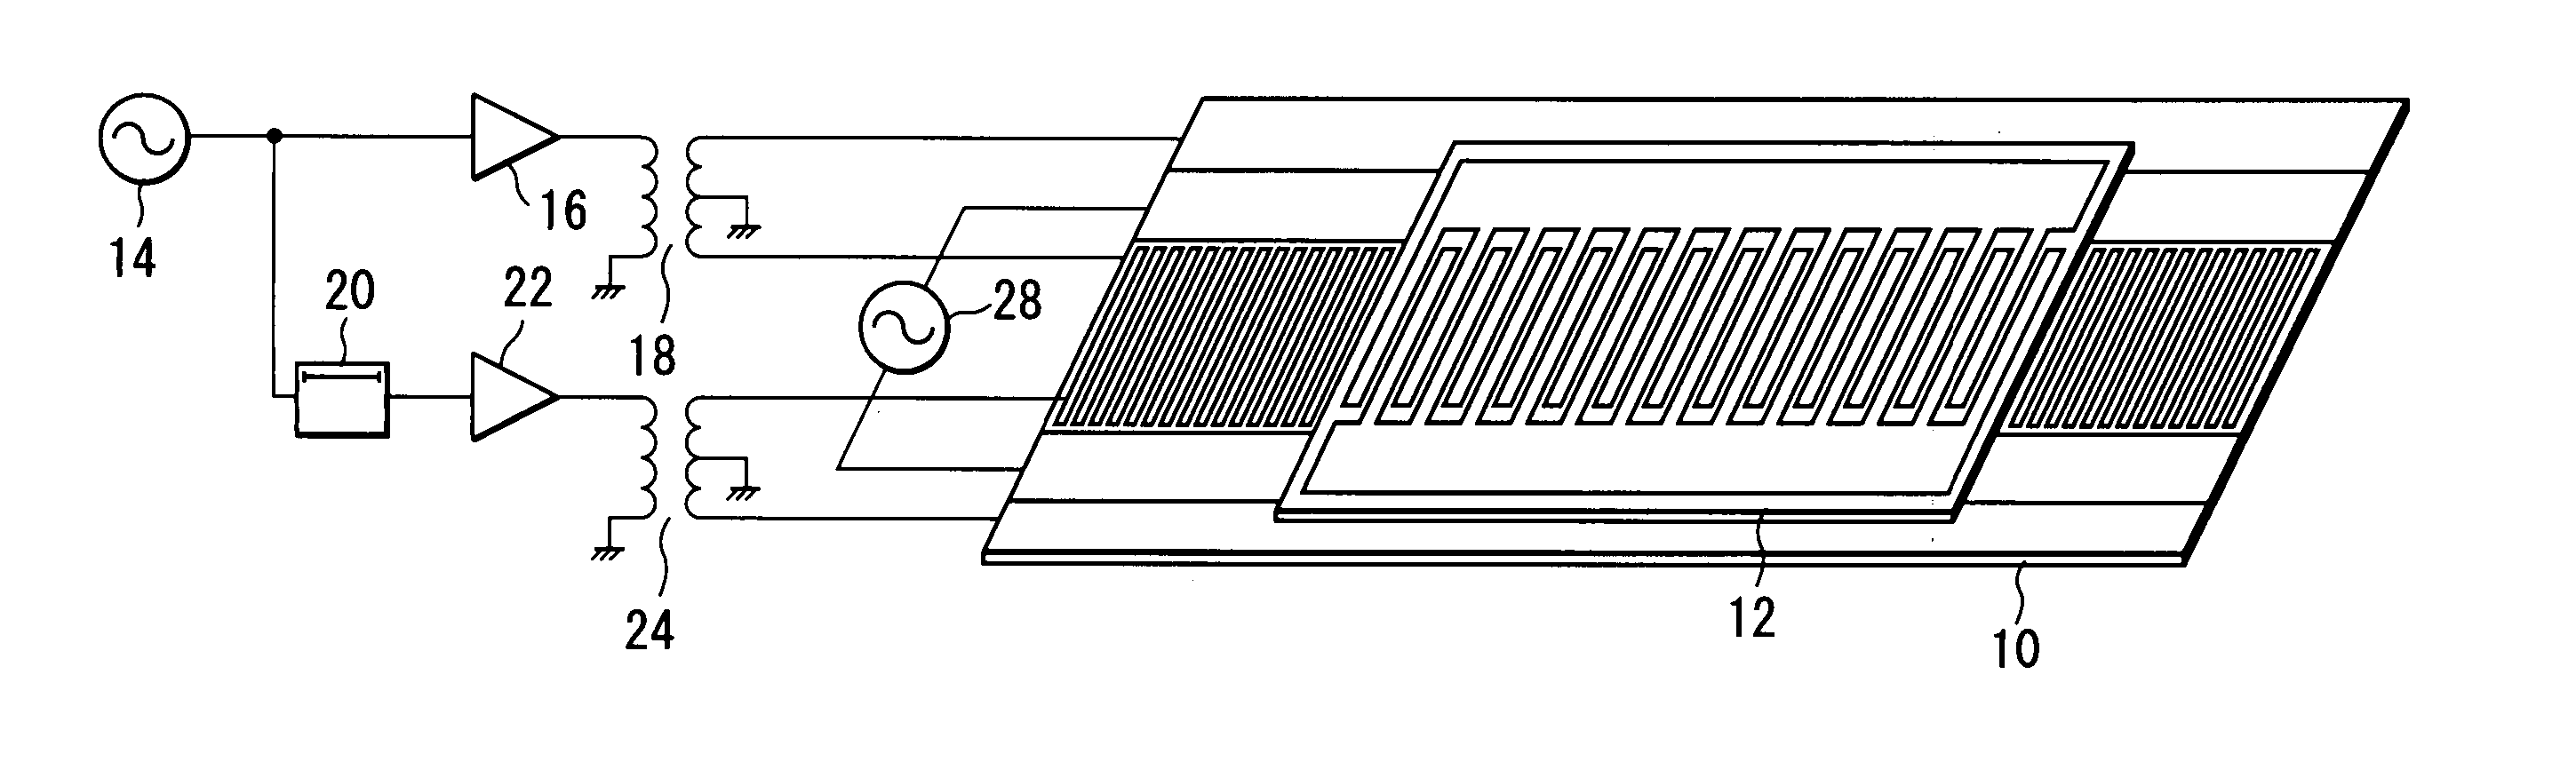 Actuator adopting the principle of electrostatic induction